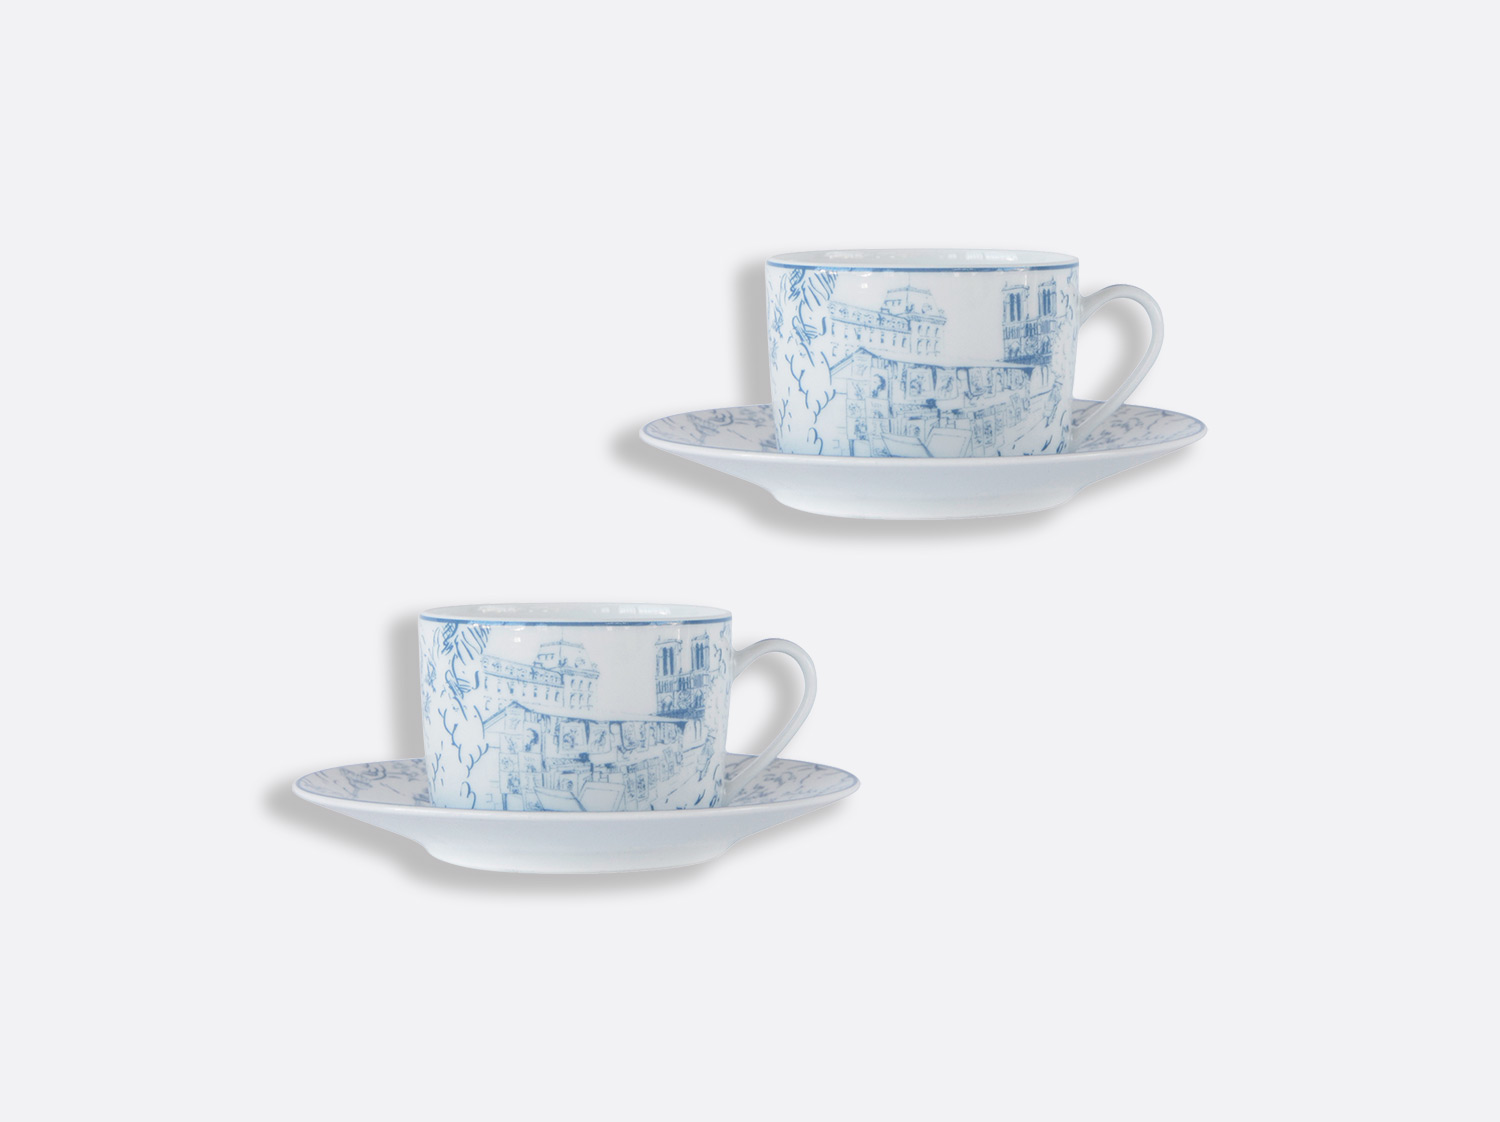 Tea & Coffee Sets - Diamond Fine Porcelain